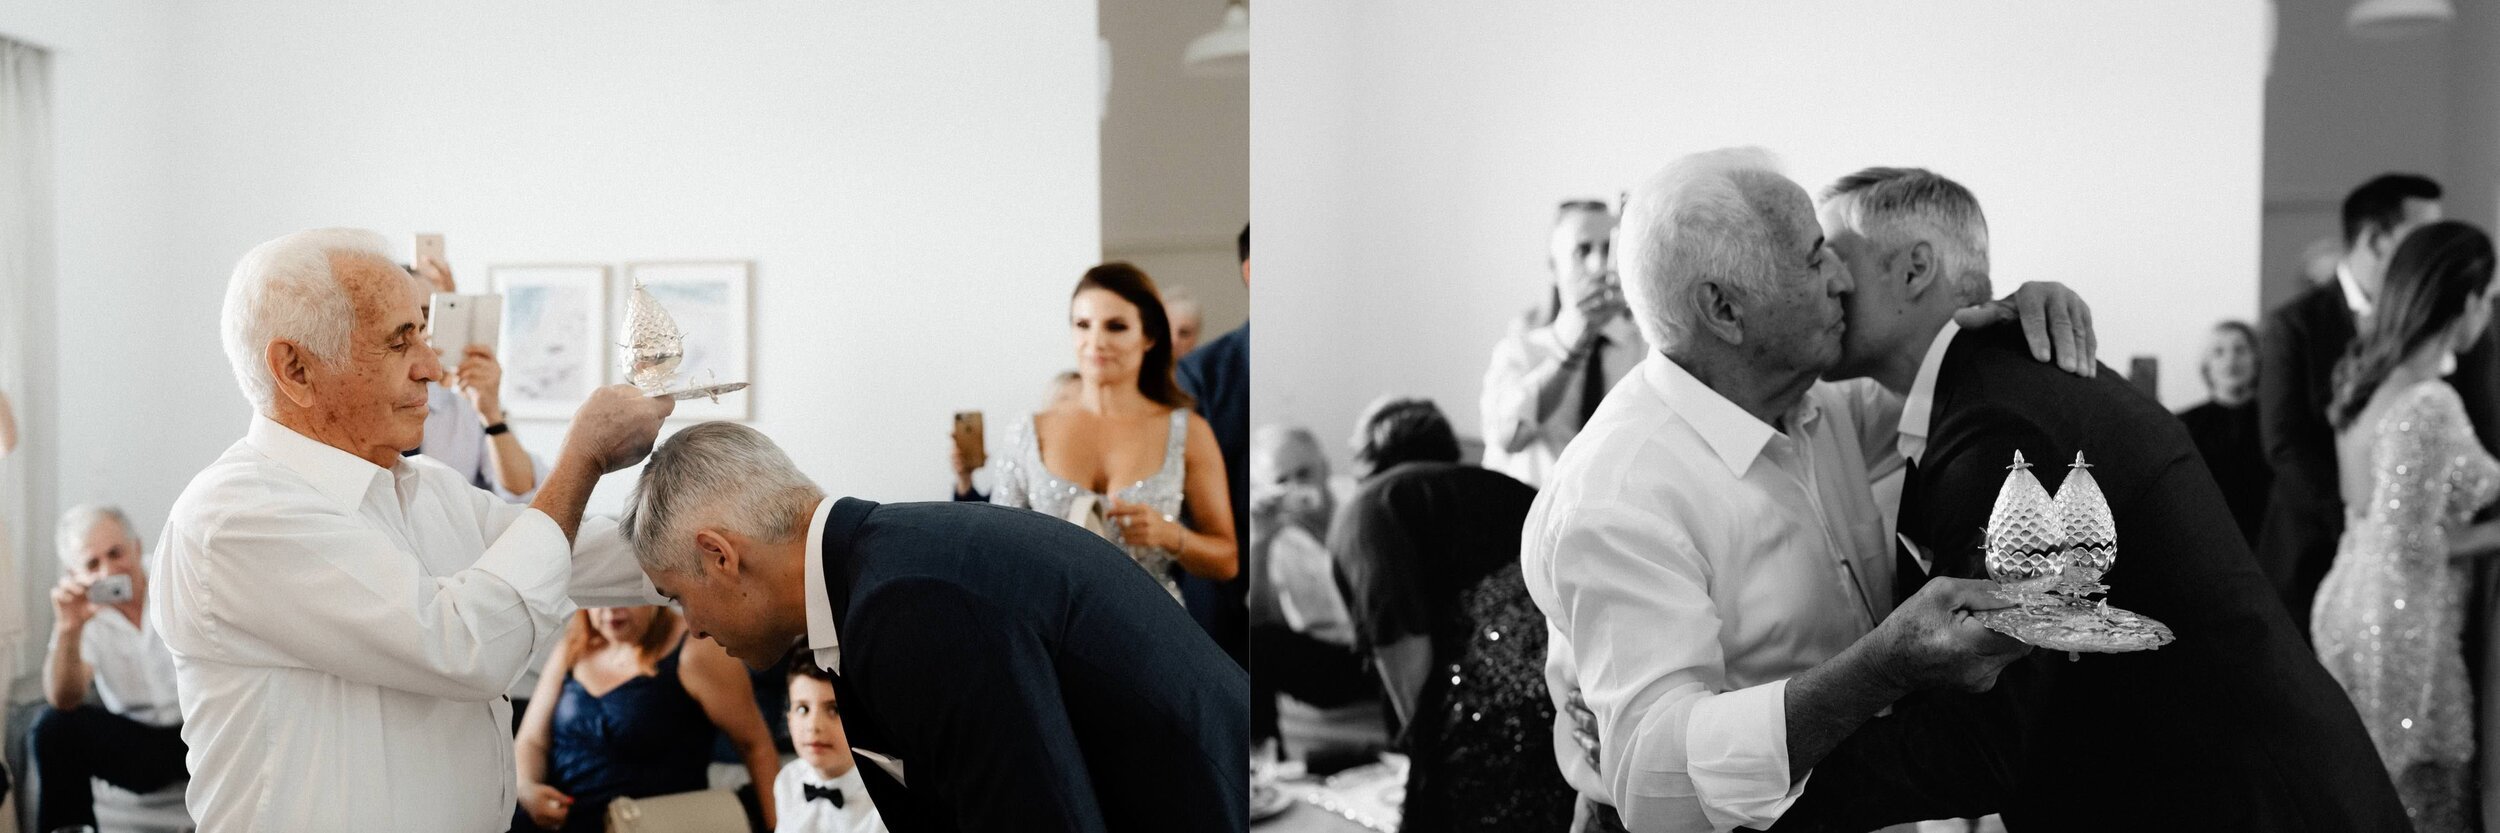 Rhodes+Greece+Santorini+Wedding+photography+-+14.jpg